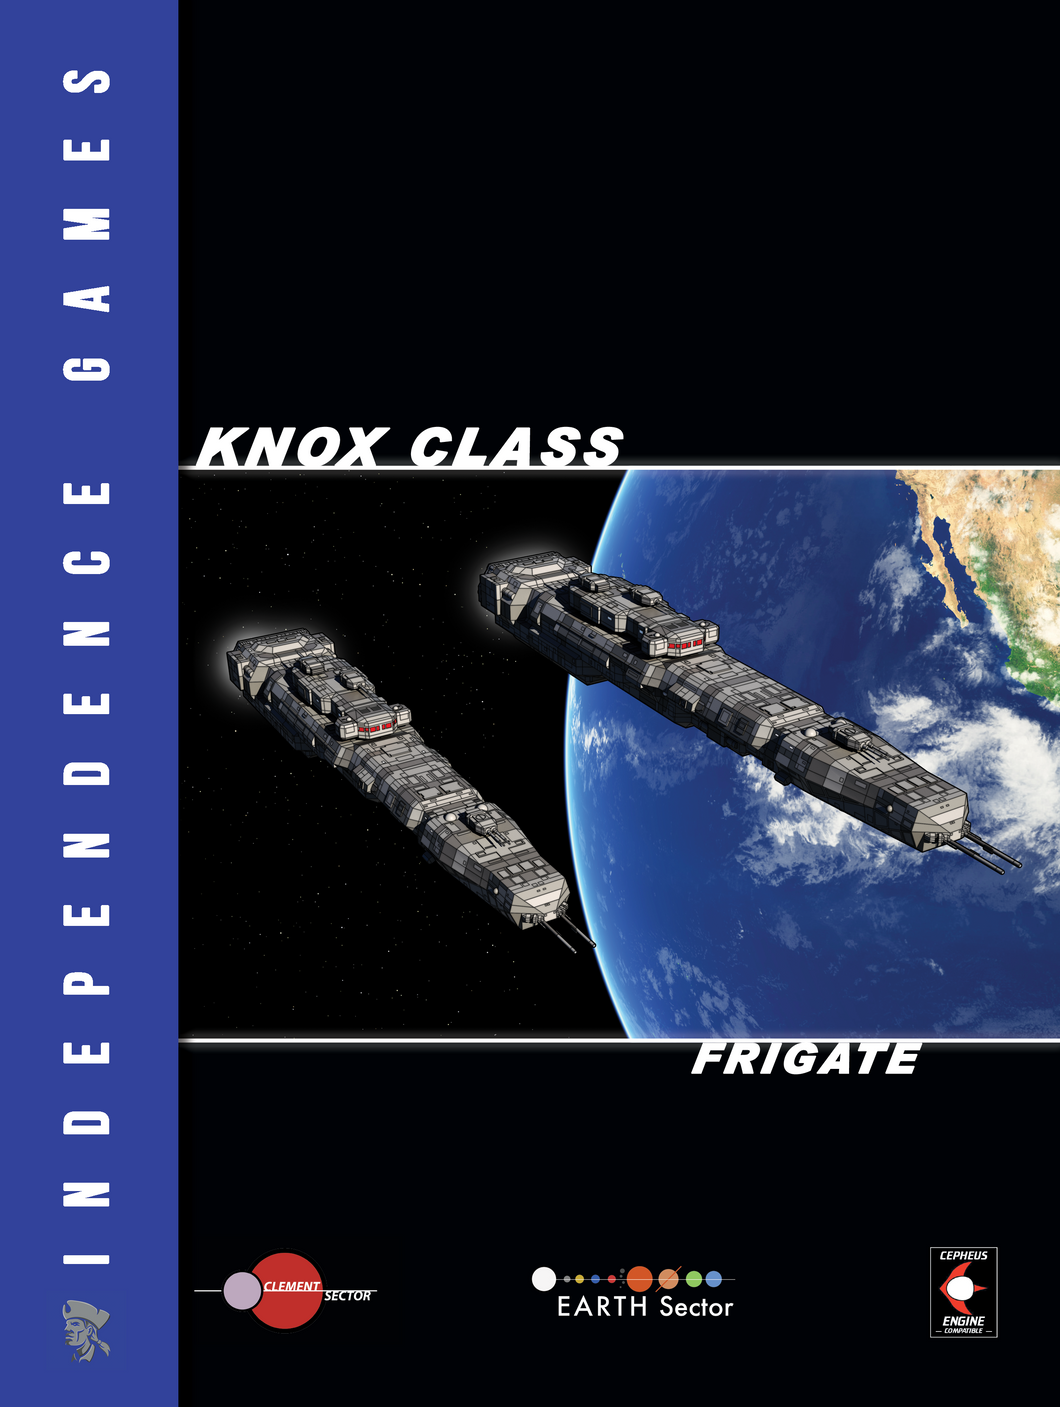 Knox-class Frigate